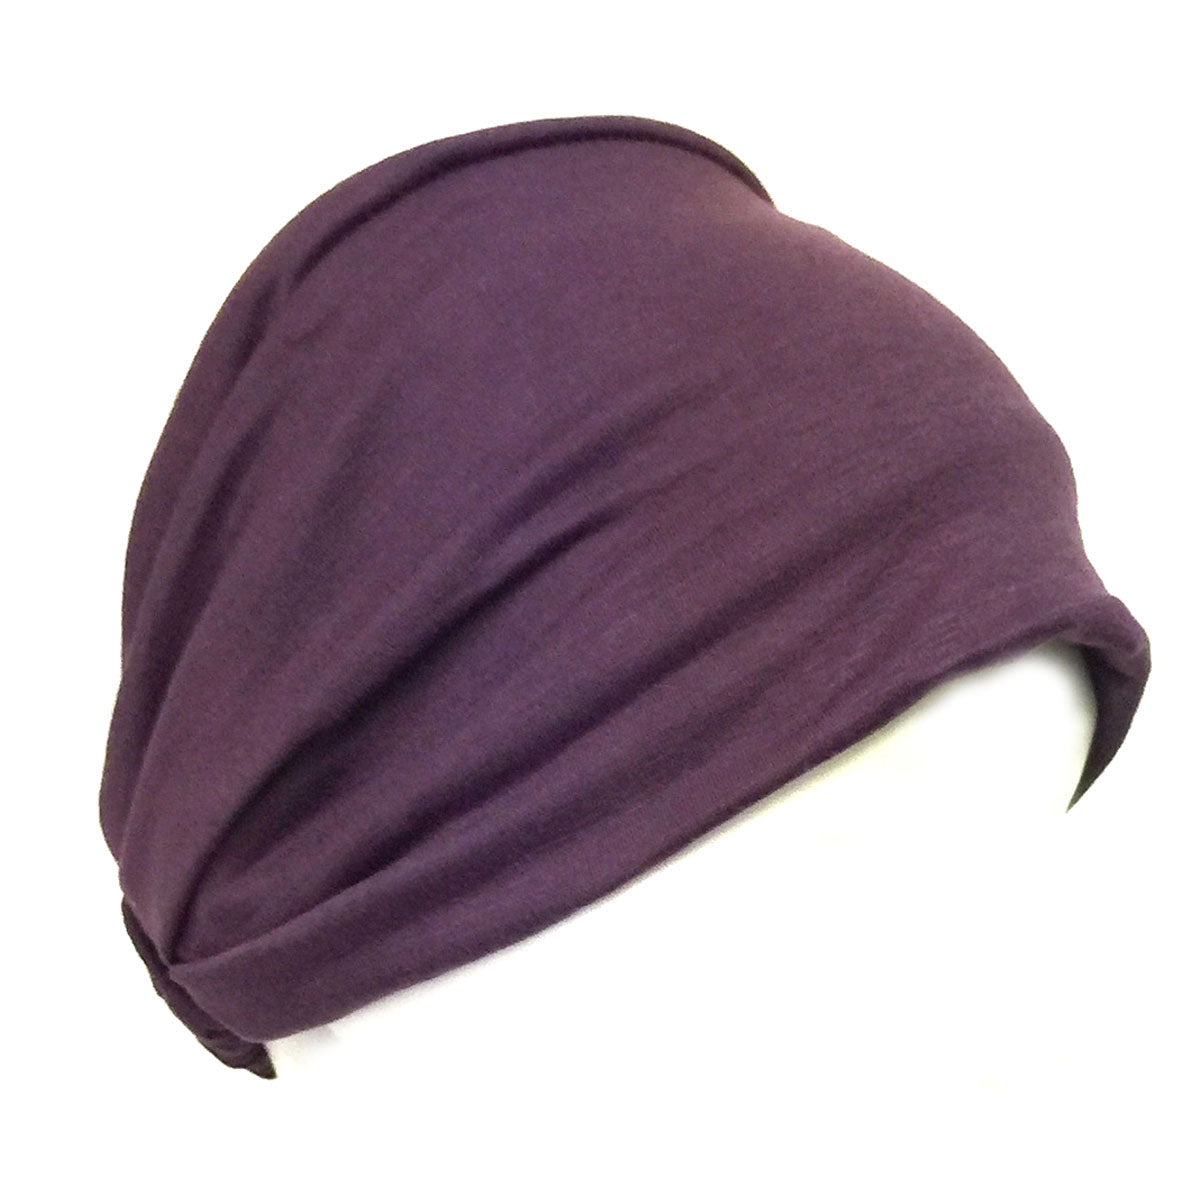 Wrapables Wide Fabric Headband